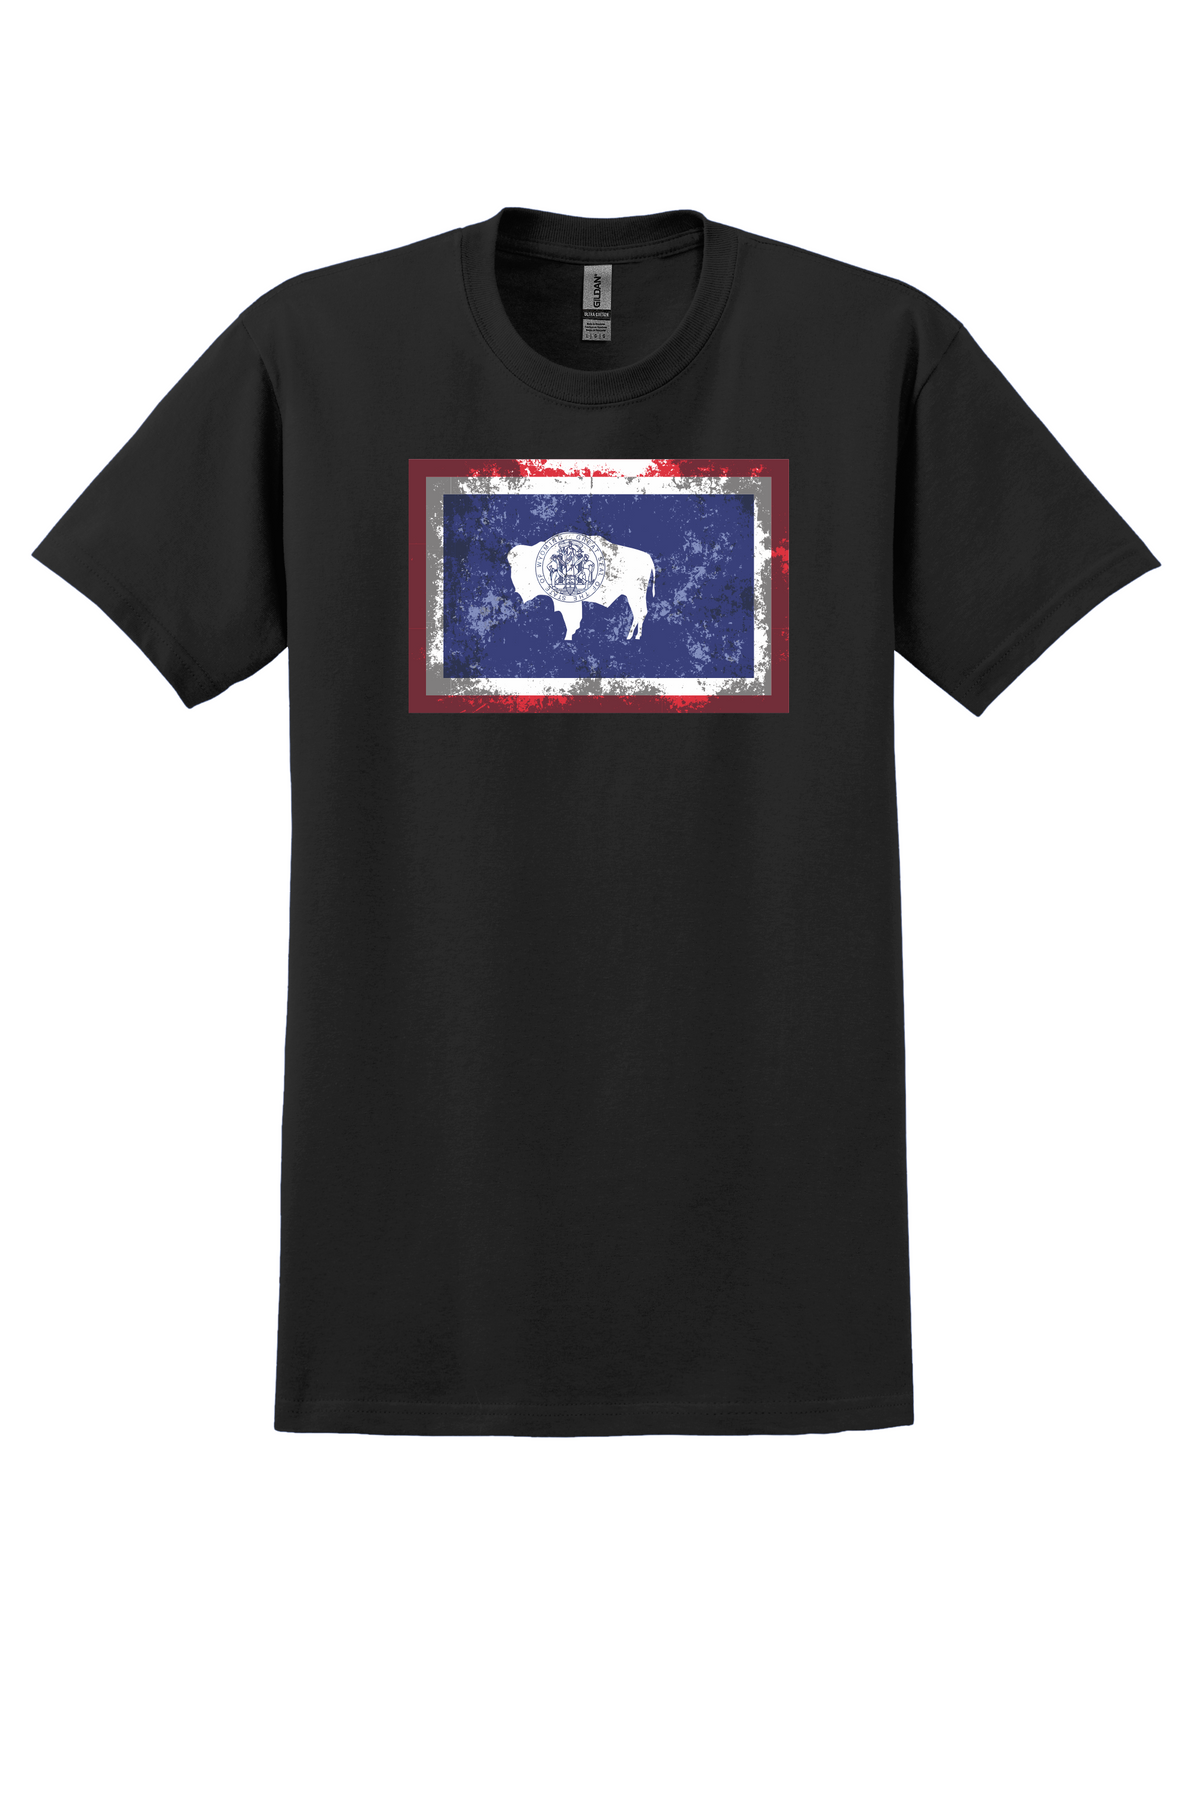 Wyoming Flag Shirt